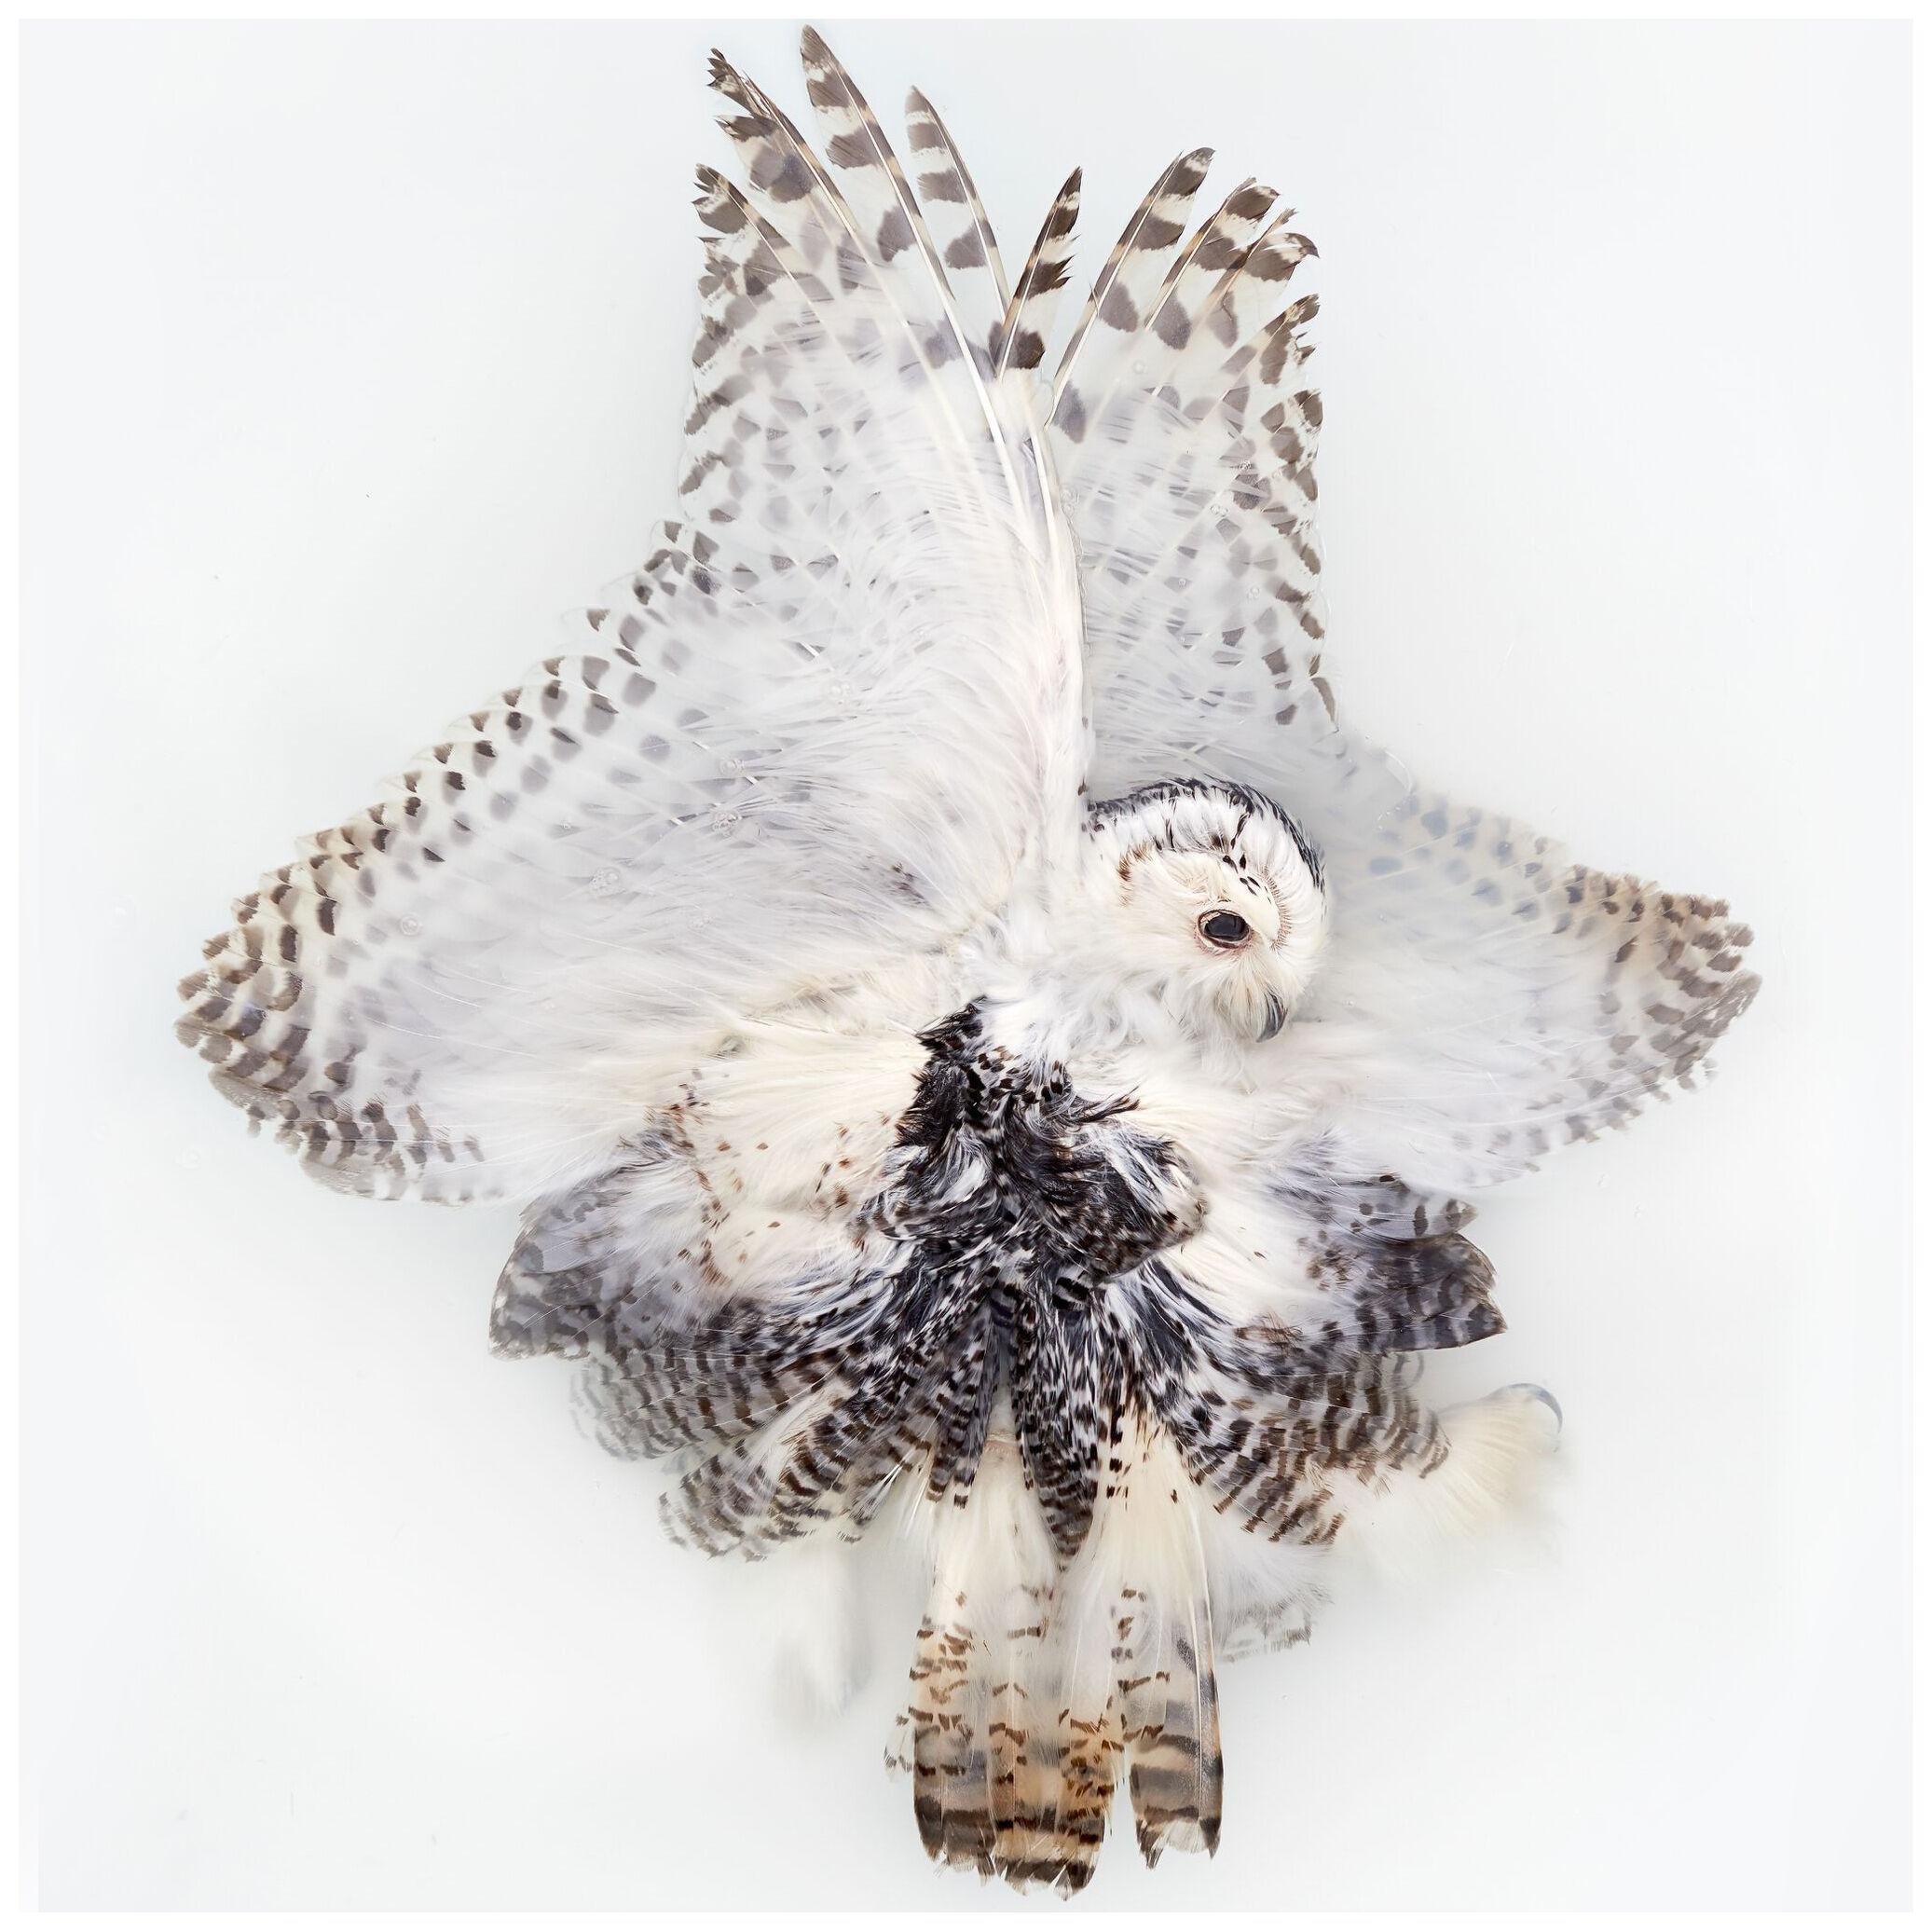 Art Print 'Unkown Pose by Snowy Owl' by Sinke & Van Tongeren 113x90 cm